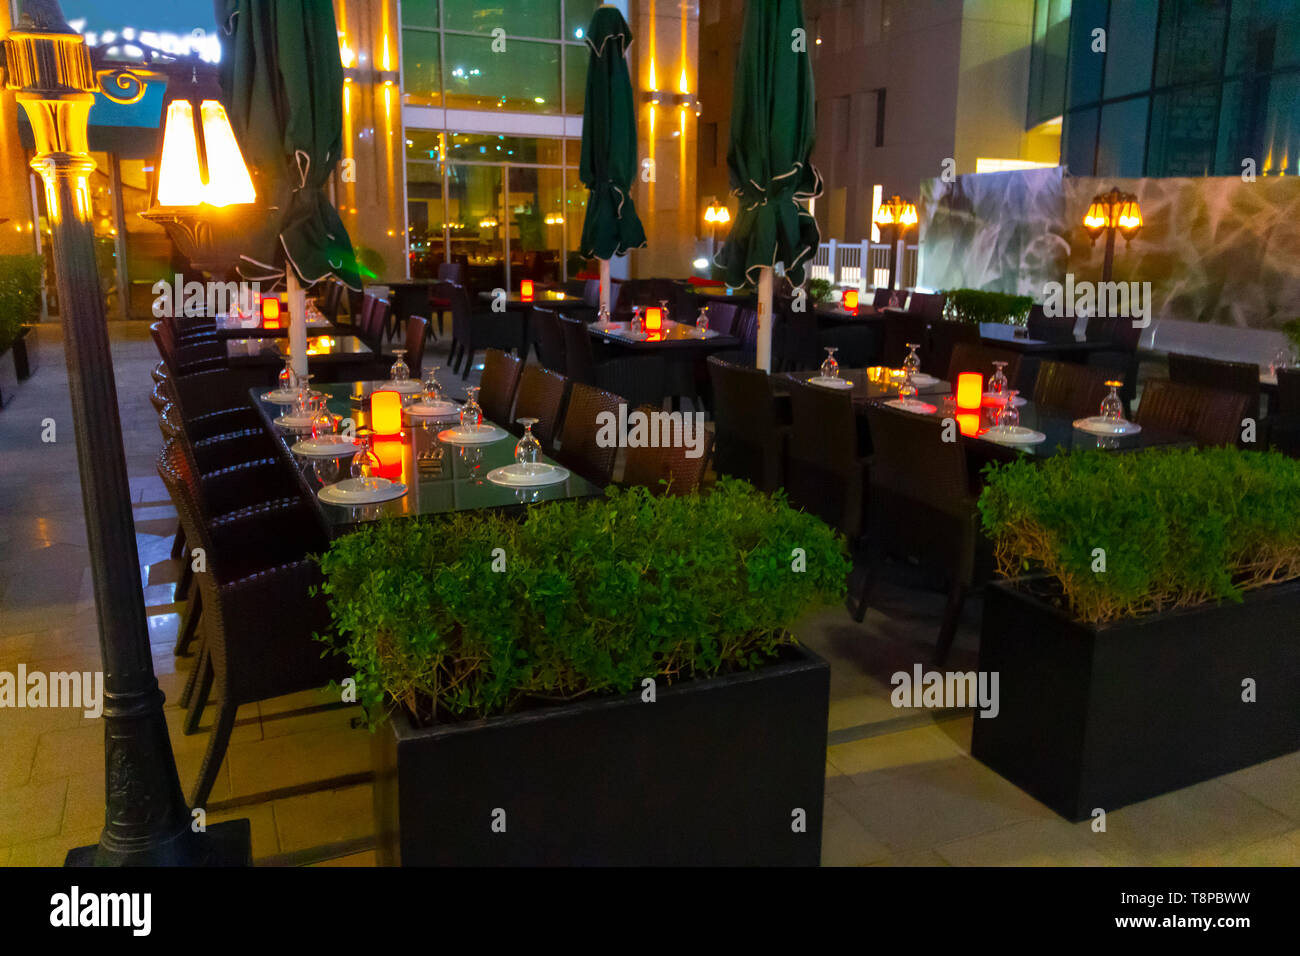 Dubai, UAE - November 28, 2018: Covered tables at an outdoor Dubai cafe evening. Stock Photo